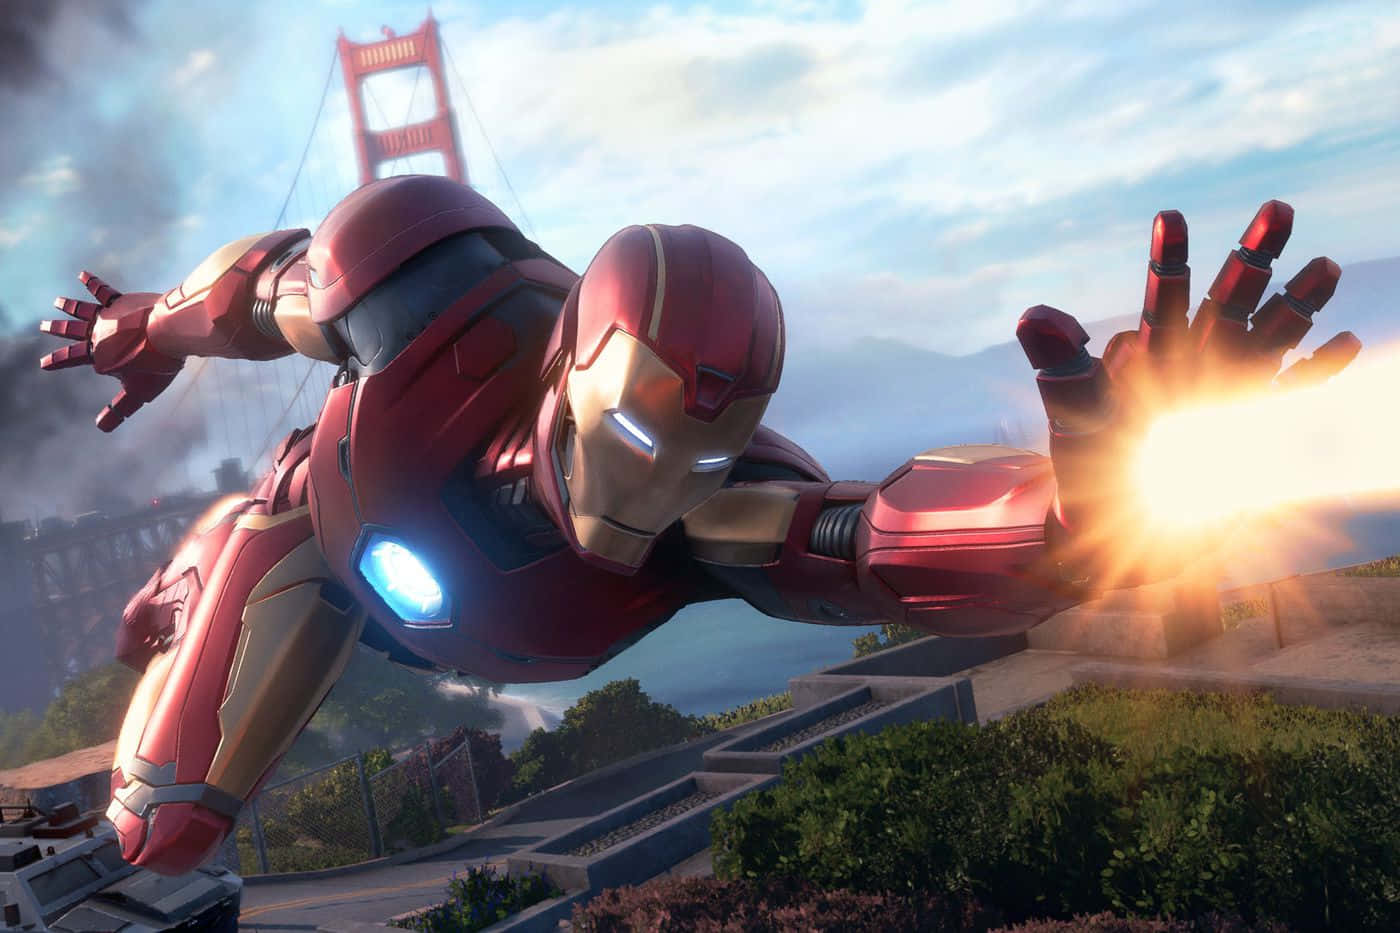 Iron Man Flying Near Golden Gate Bridge Picture